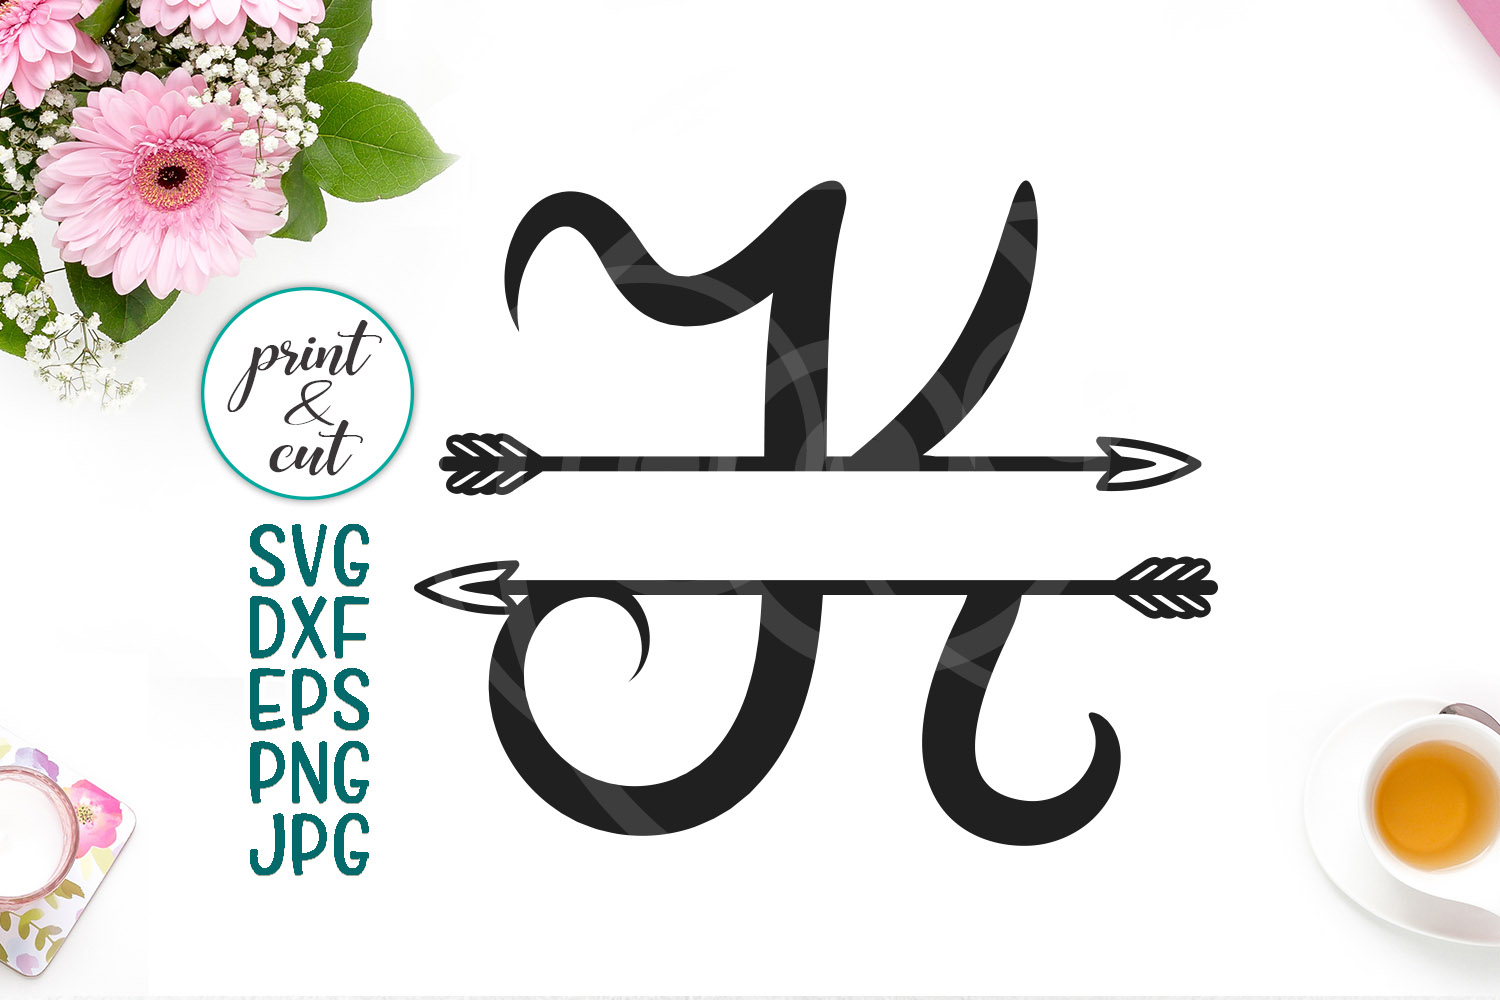 Download Split Monogram letters K with arrows for print cut dxf svg